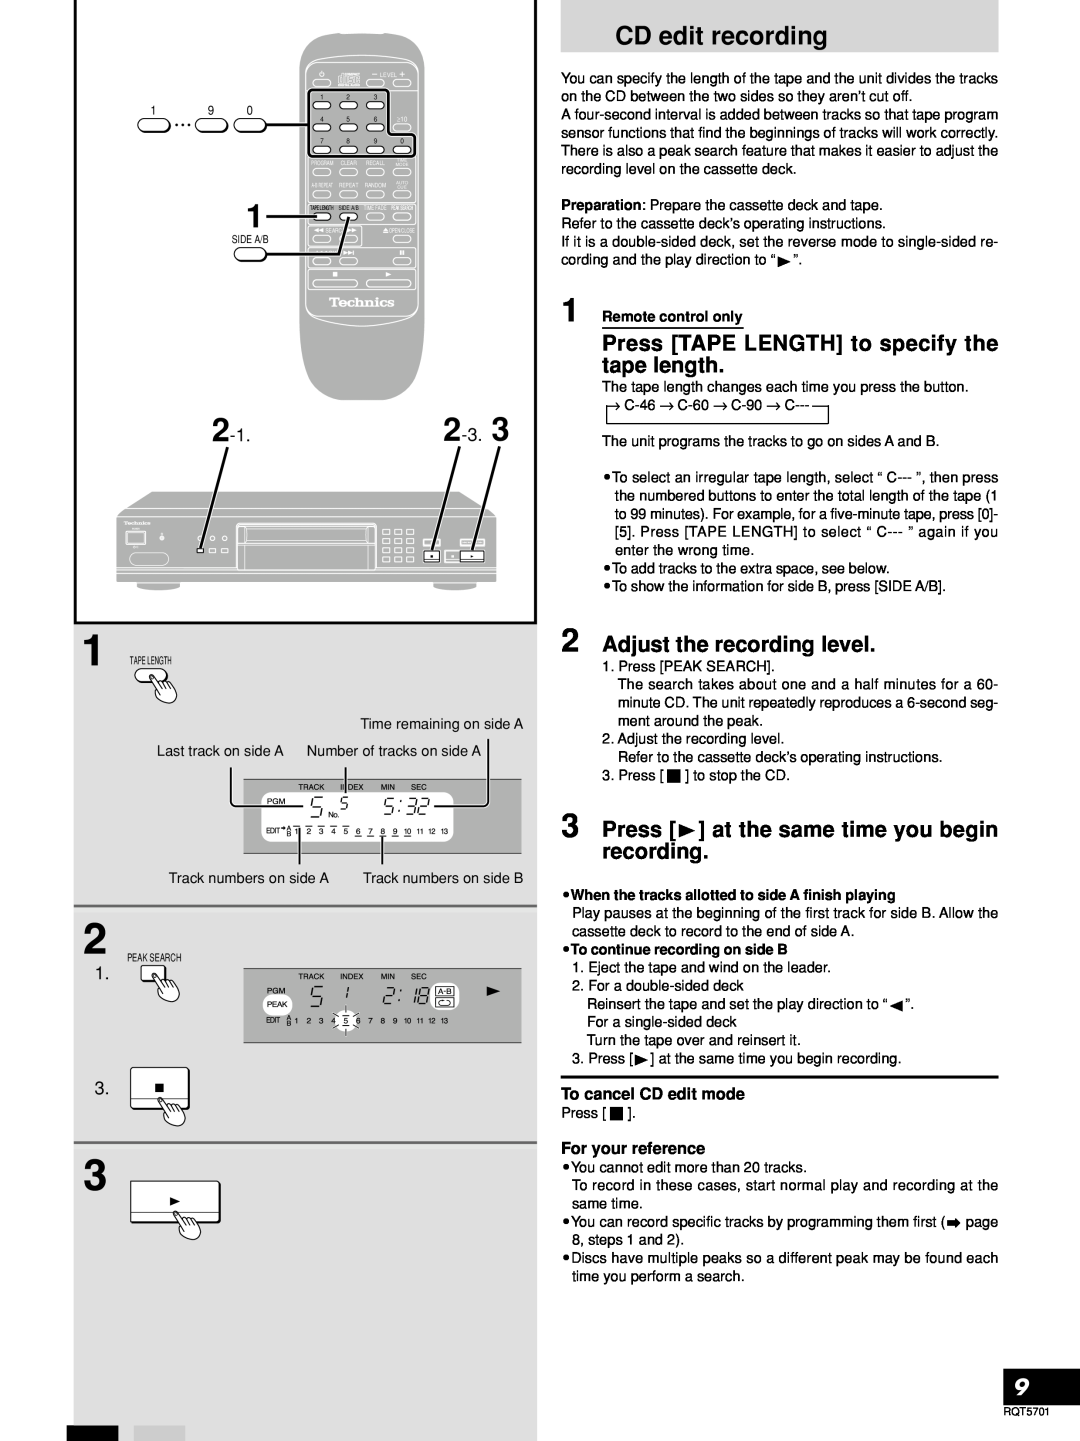 Panasonic SL-PG4 manual CD edit recording, Press TAPE LENGTH to specify the tape length, Adjust the recording level, 2-3 